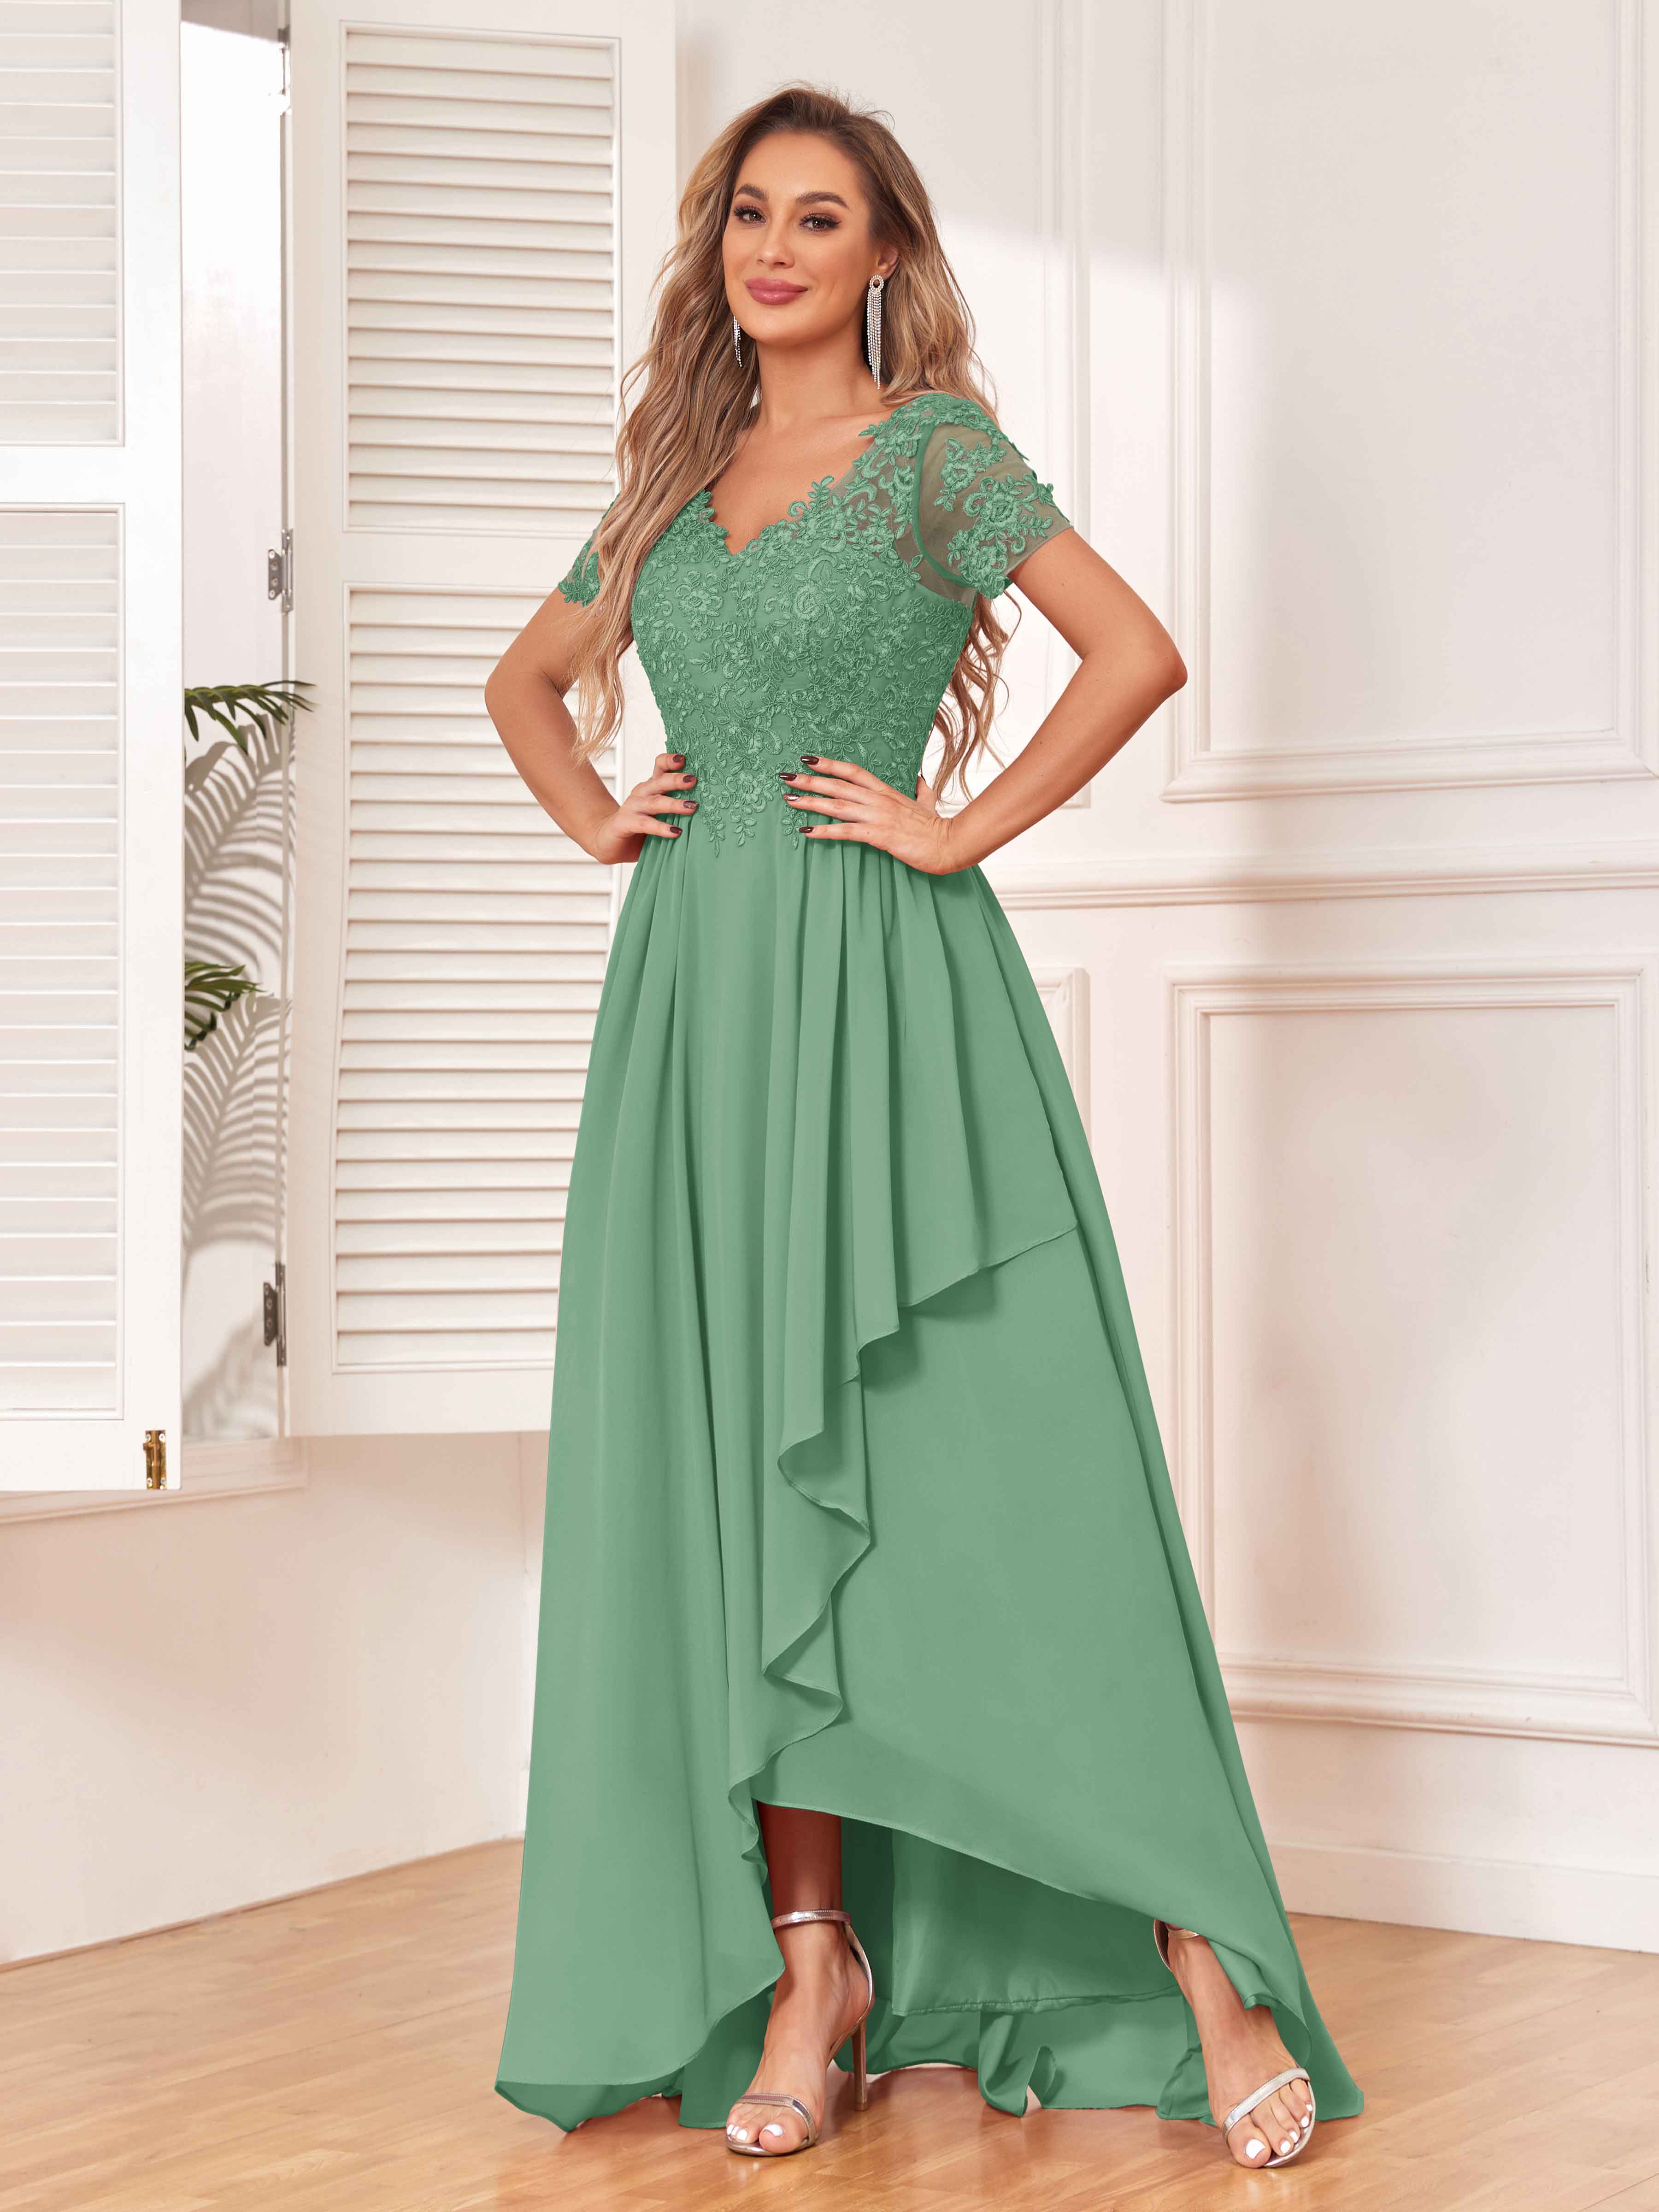 40+ Colors-Chiffon, Lace & Satin Eucalyptus Bridesmaid Dresses, $59 up